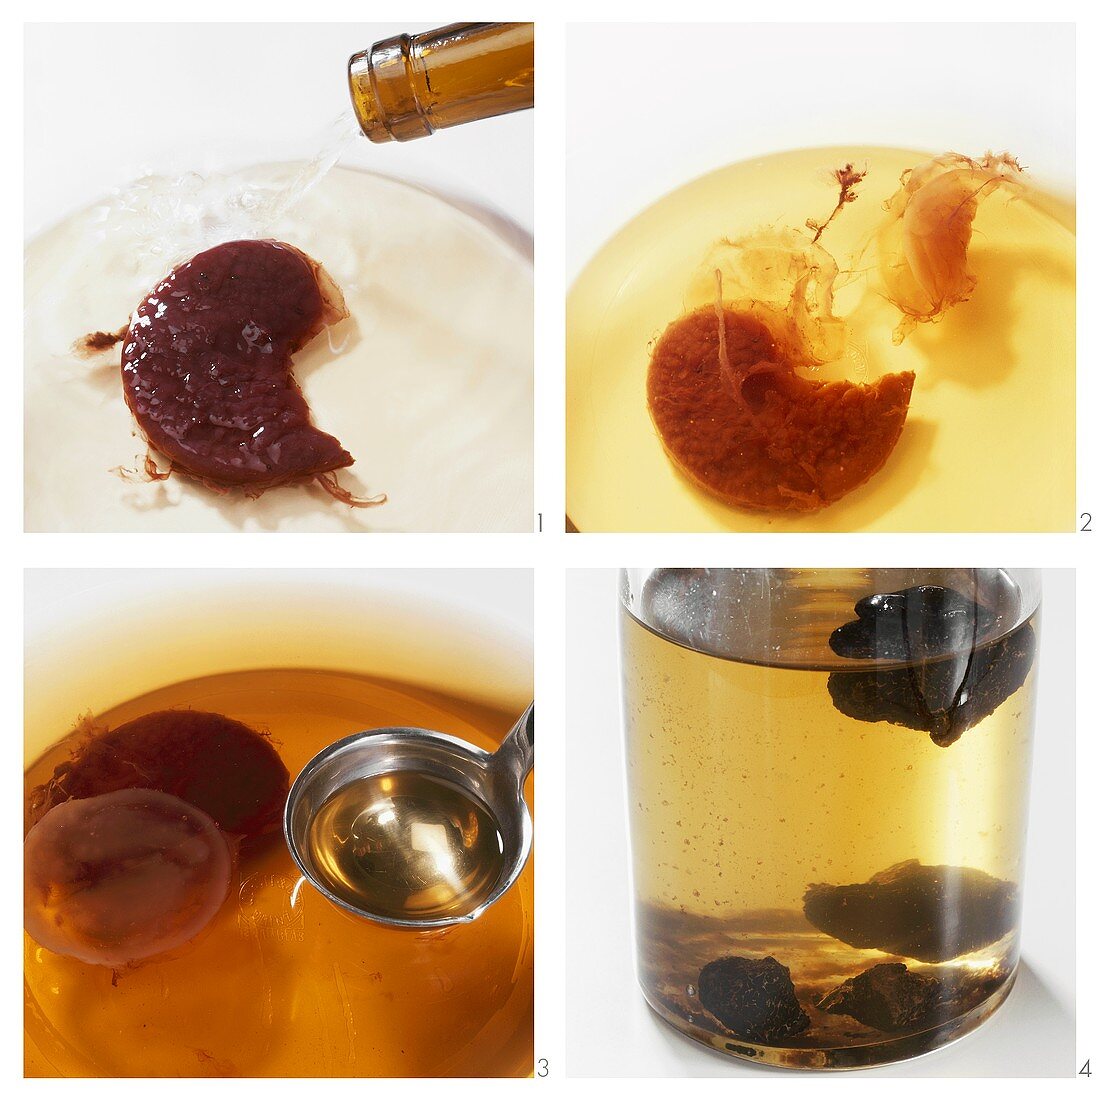 Making home-made vinegar